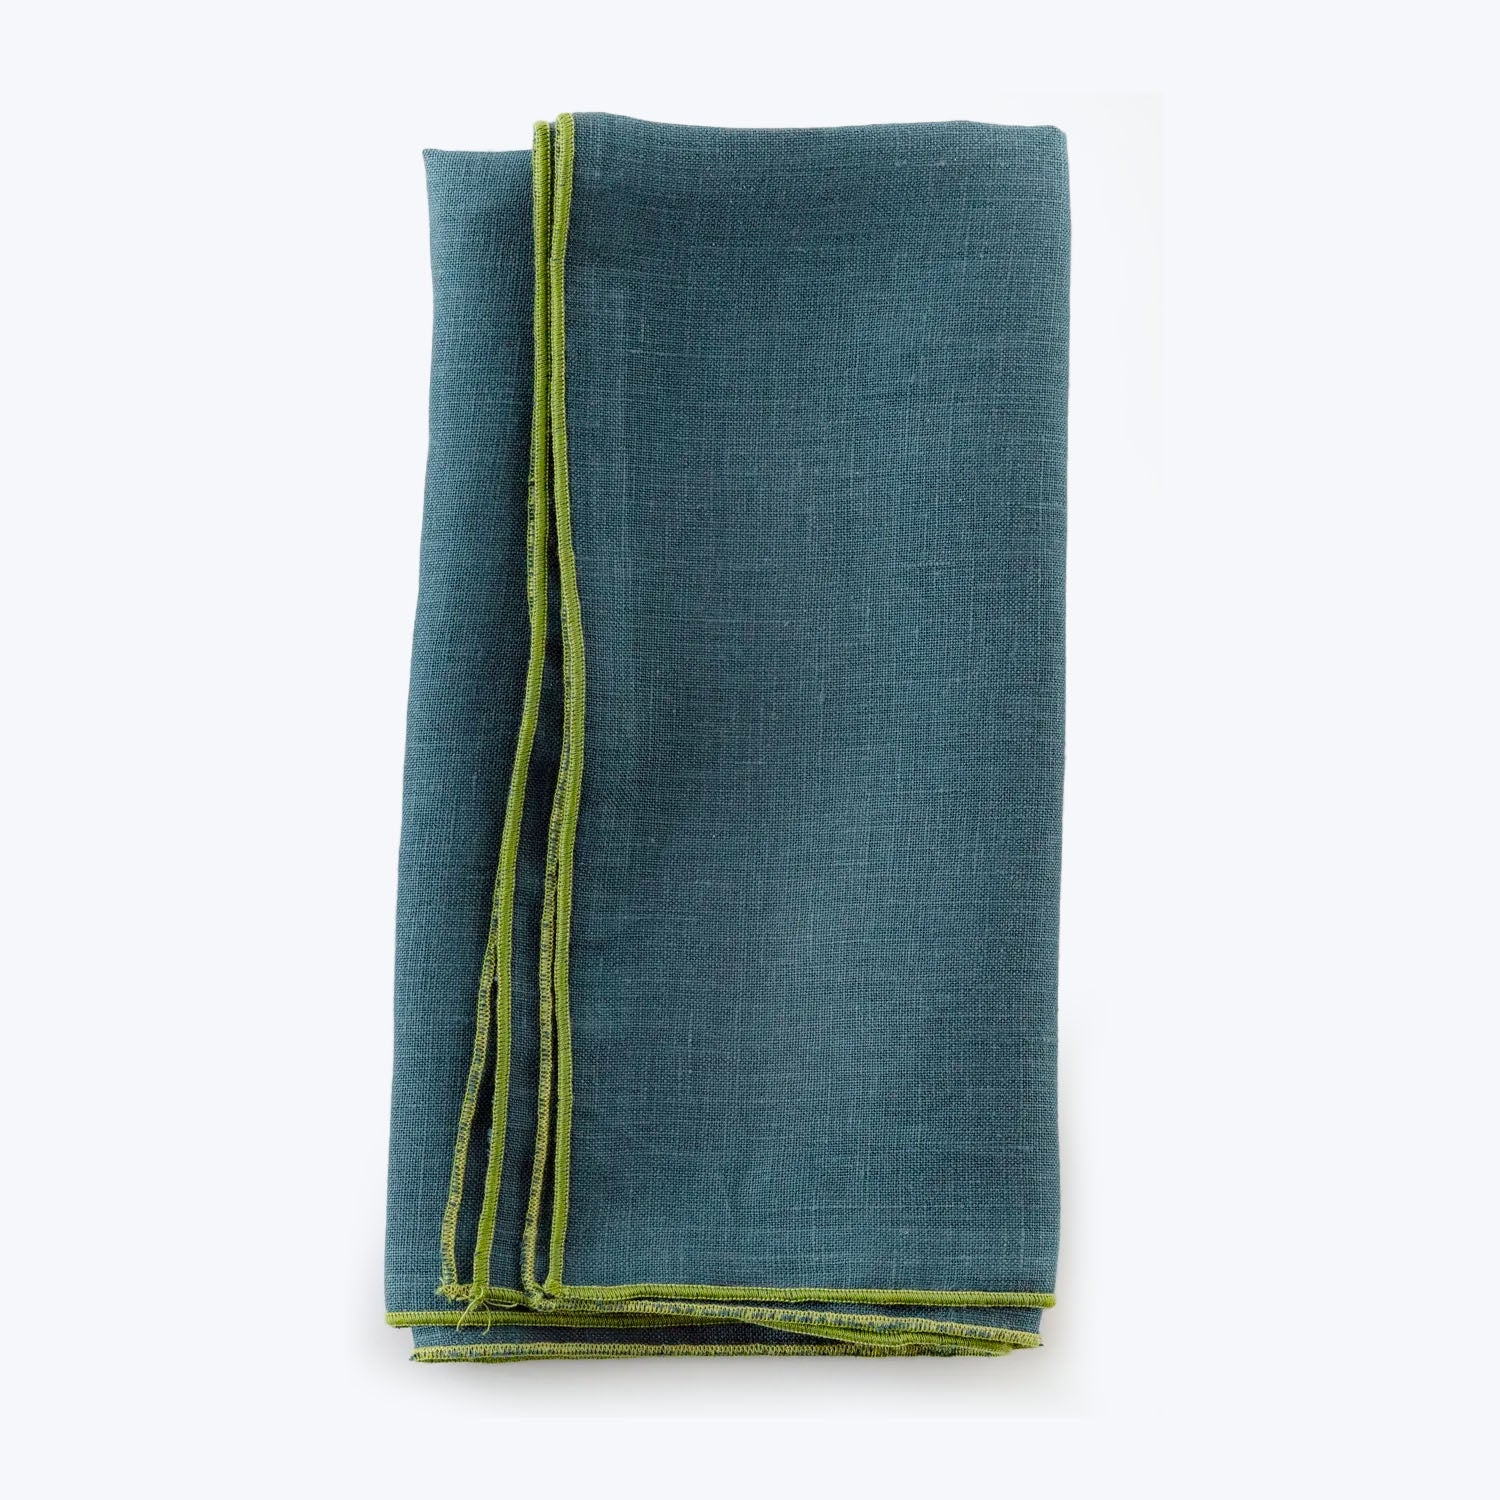 Neatly folded deep blue fabric with greenish-yellow border on white background.